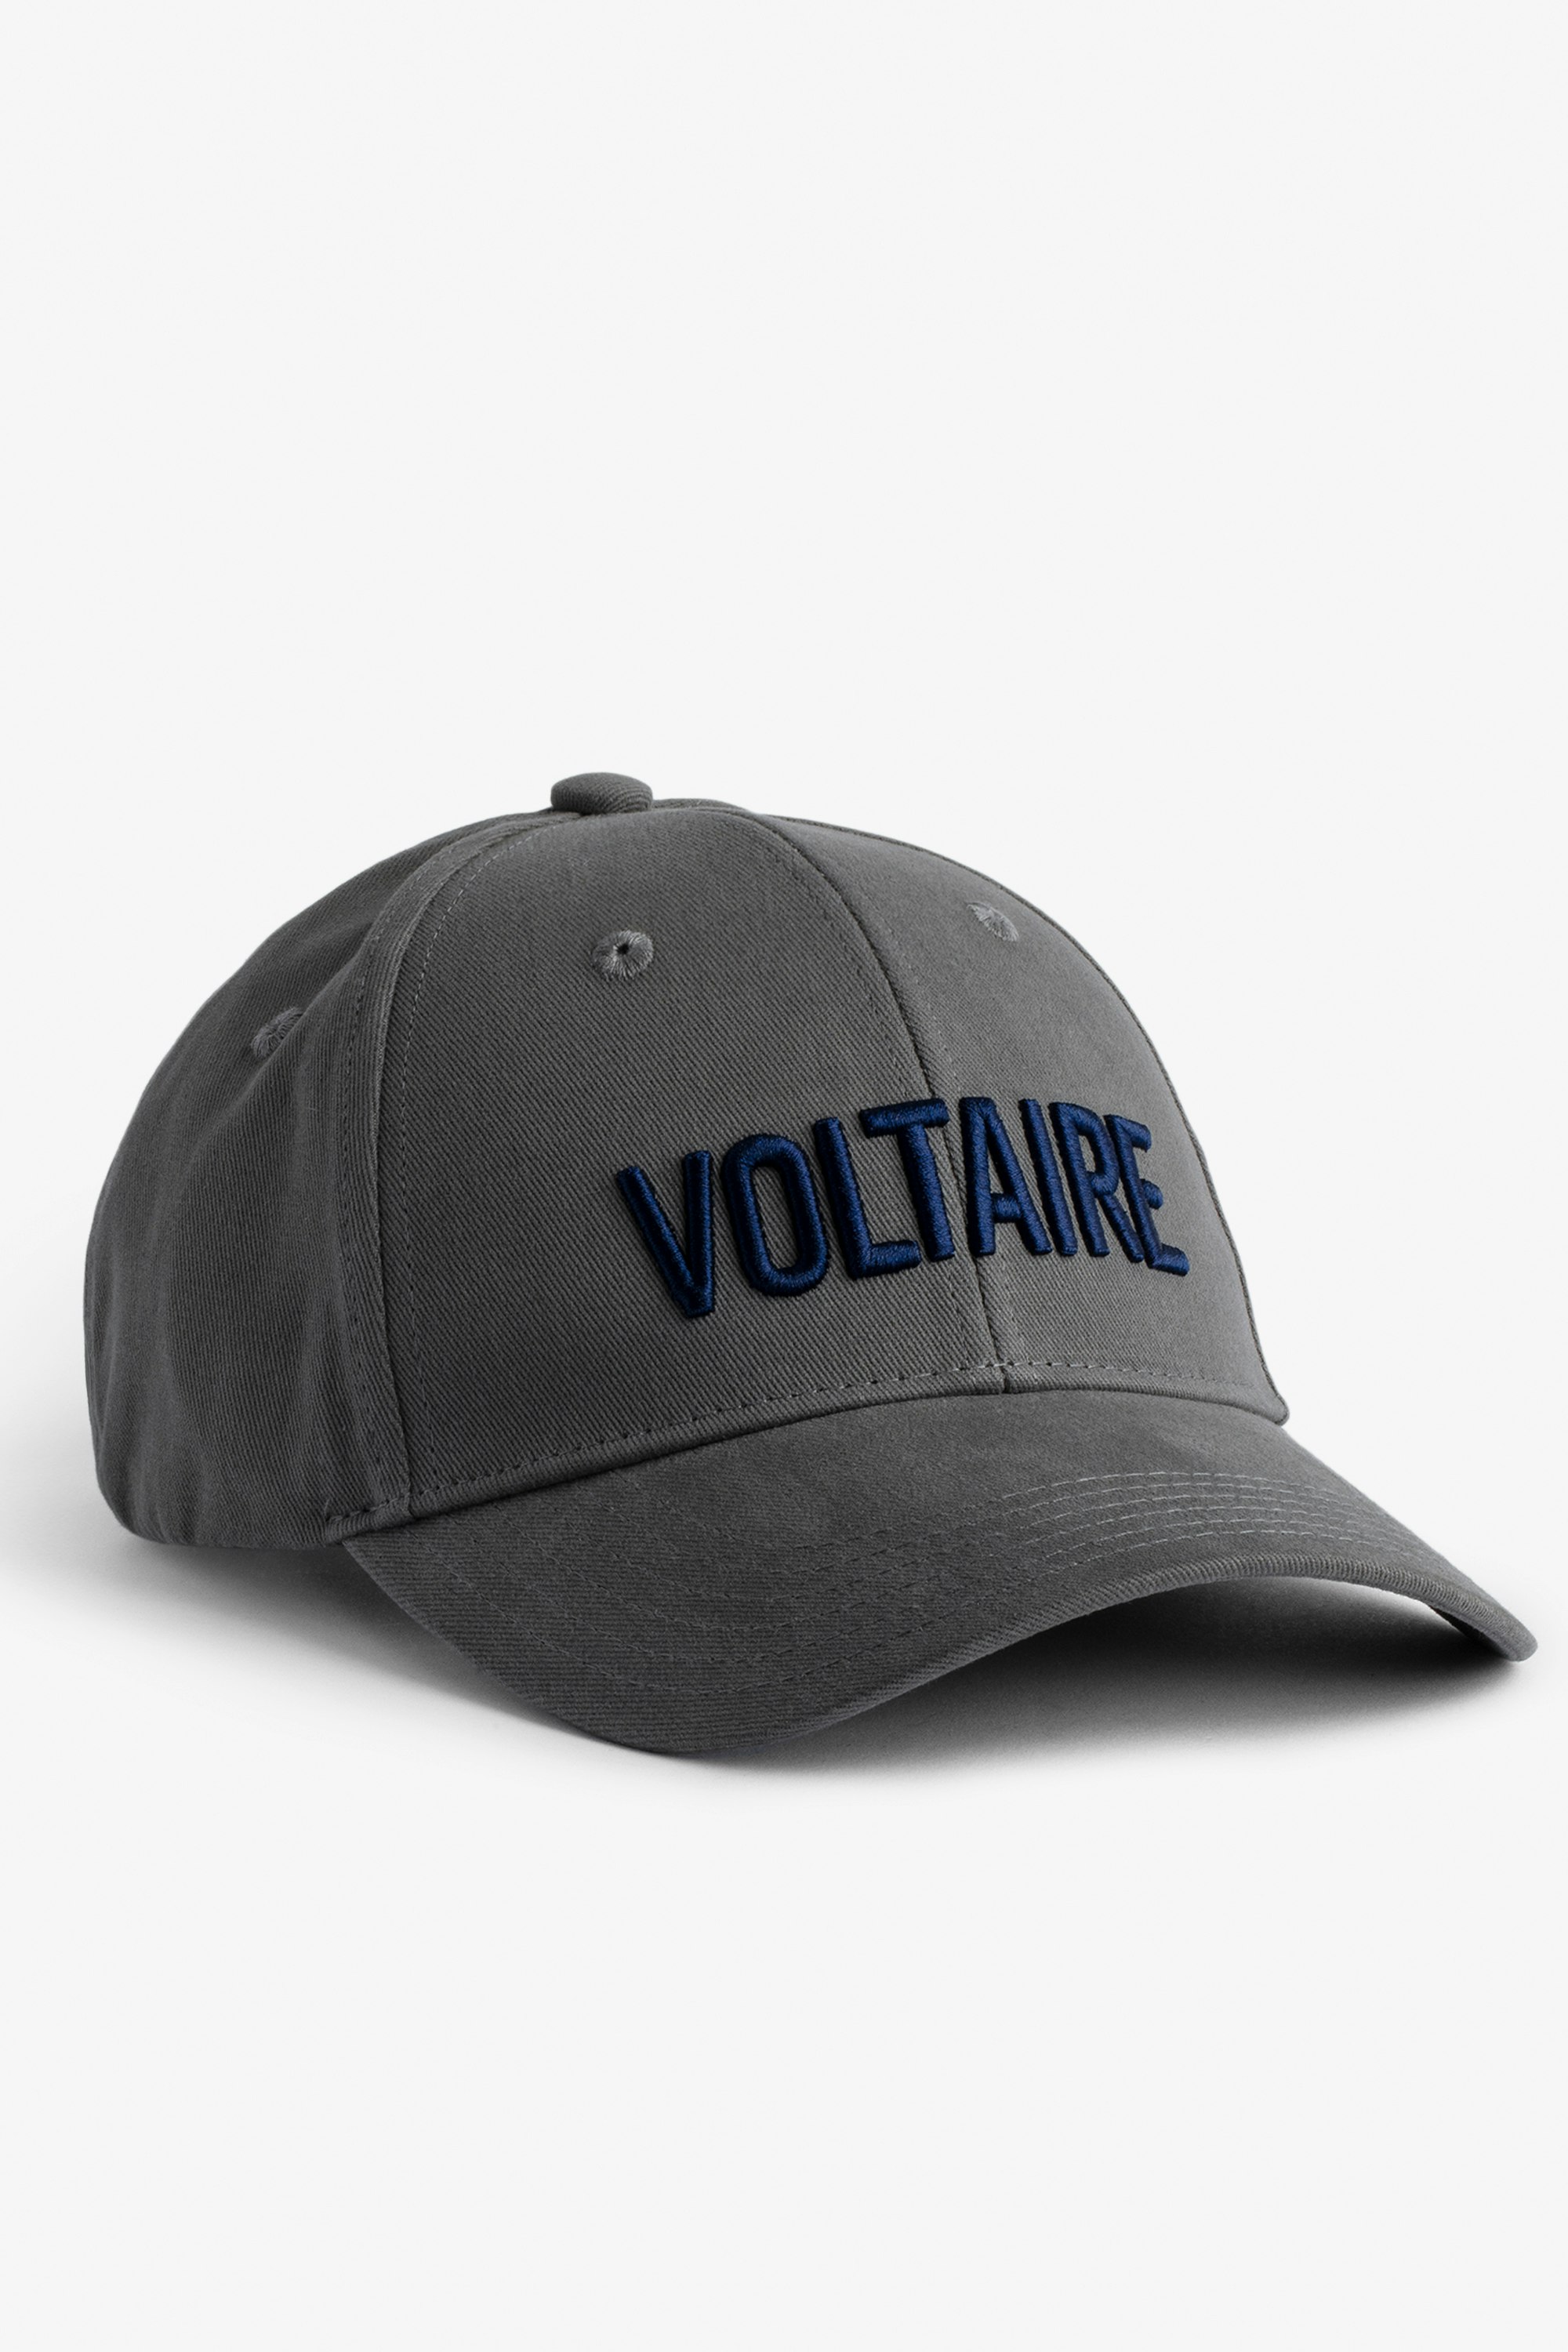 Klelia Voltaire Cap Men's grey cotton cap embroidered “Voltaire”